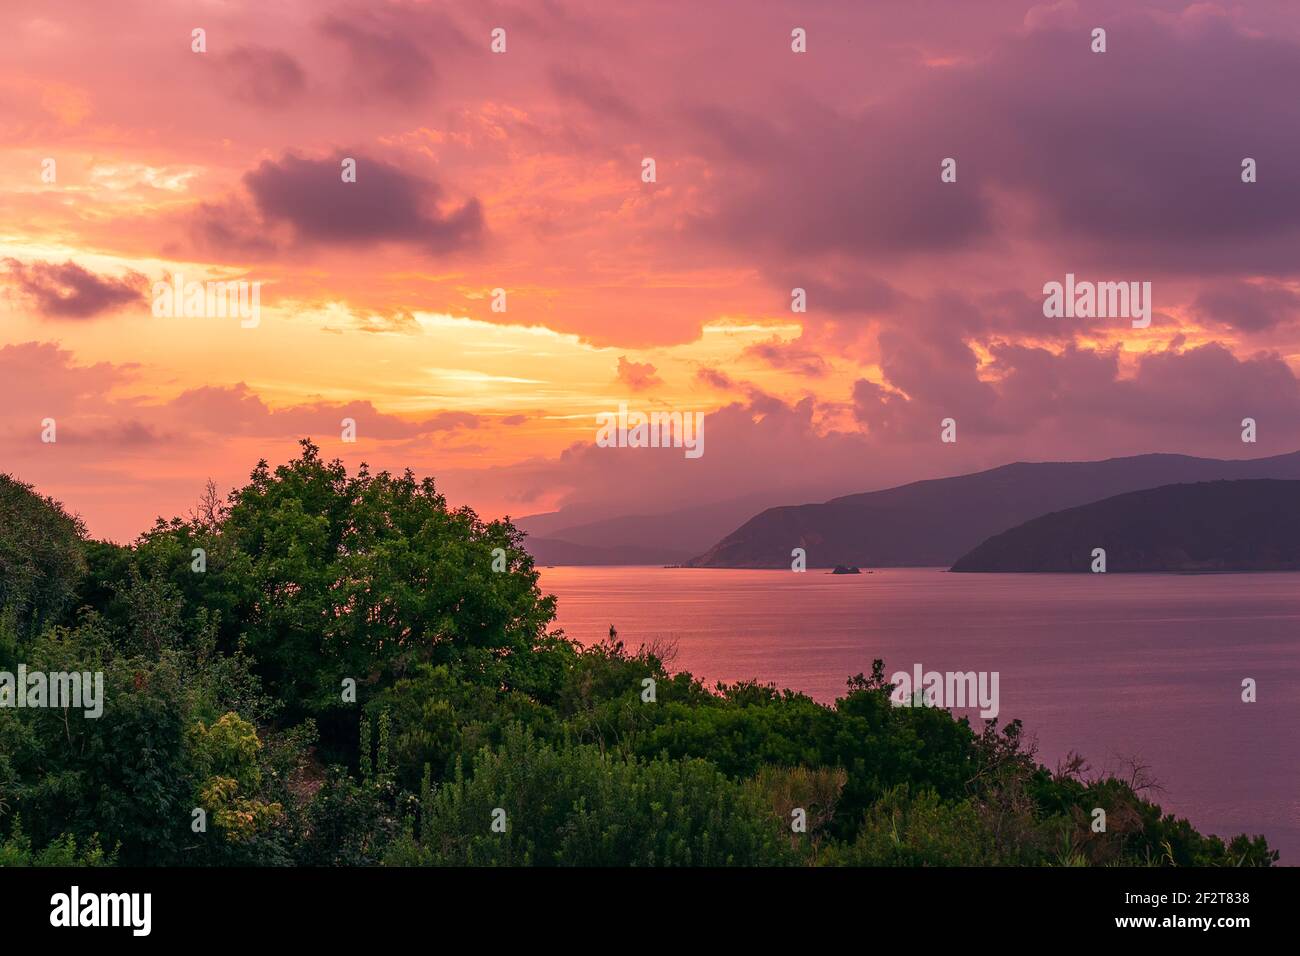 Wunderschöner violetter Sonnenuntergang auf der Insel Elba. Toskana, Italien Stockfoto